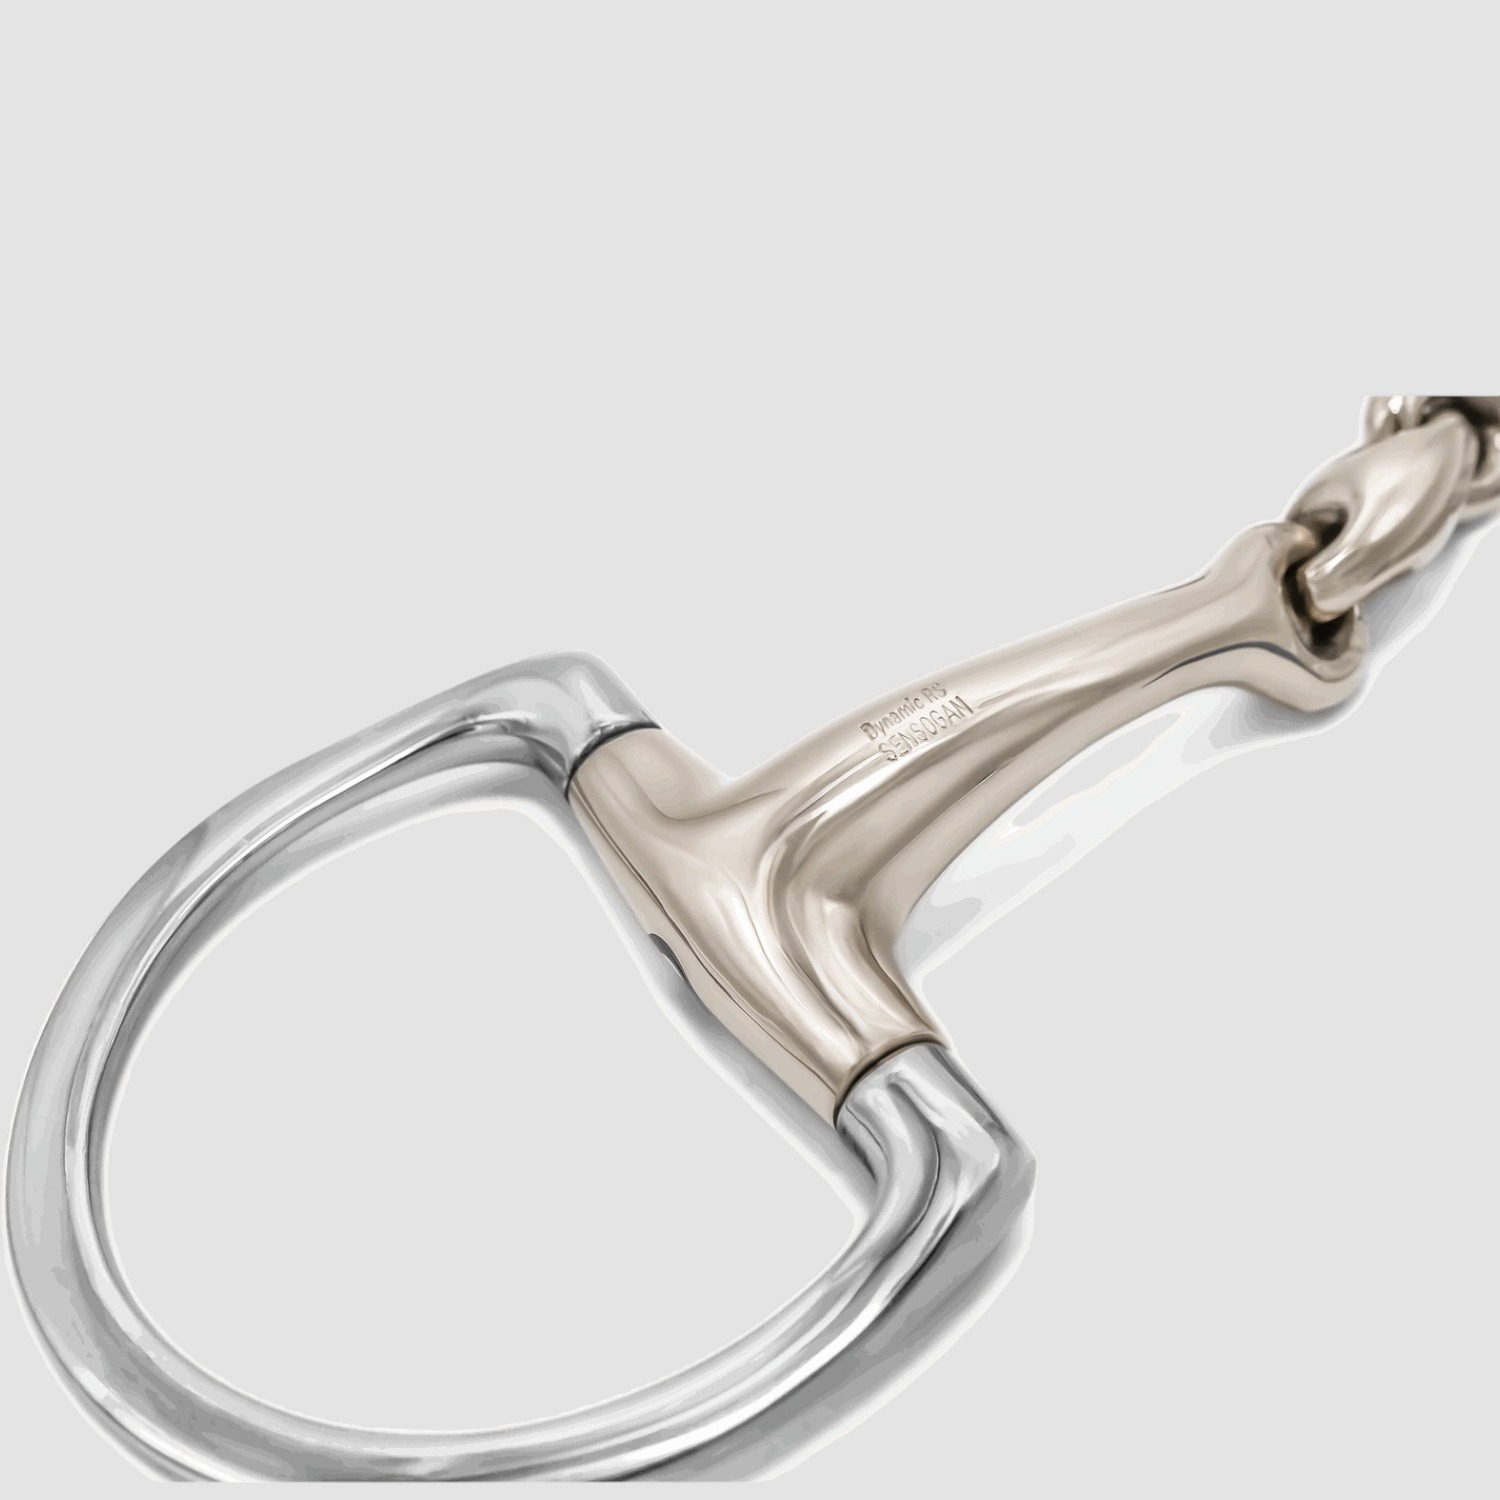 Sprenger Dynamic RS Olivenkopfgebiss m. D-förmigen Ringen einfach gebrochen 16mm